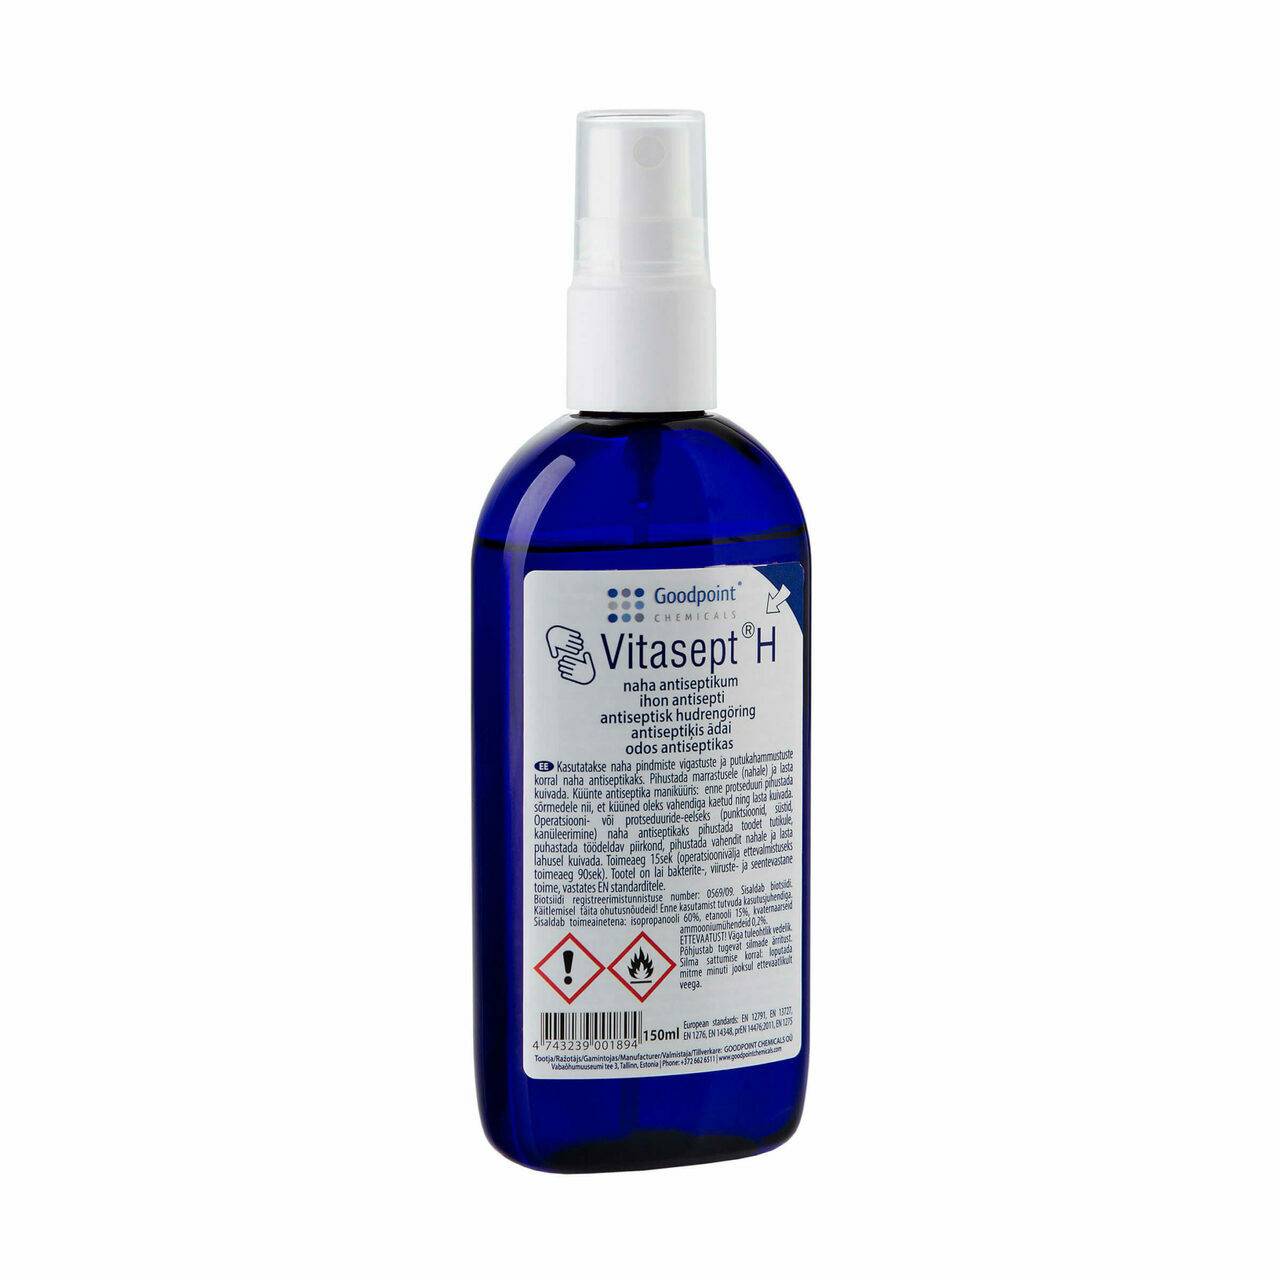 Vitasept H Skin Antiseptic Spray 150ml - UKMEDI